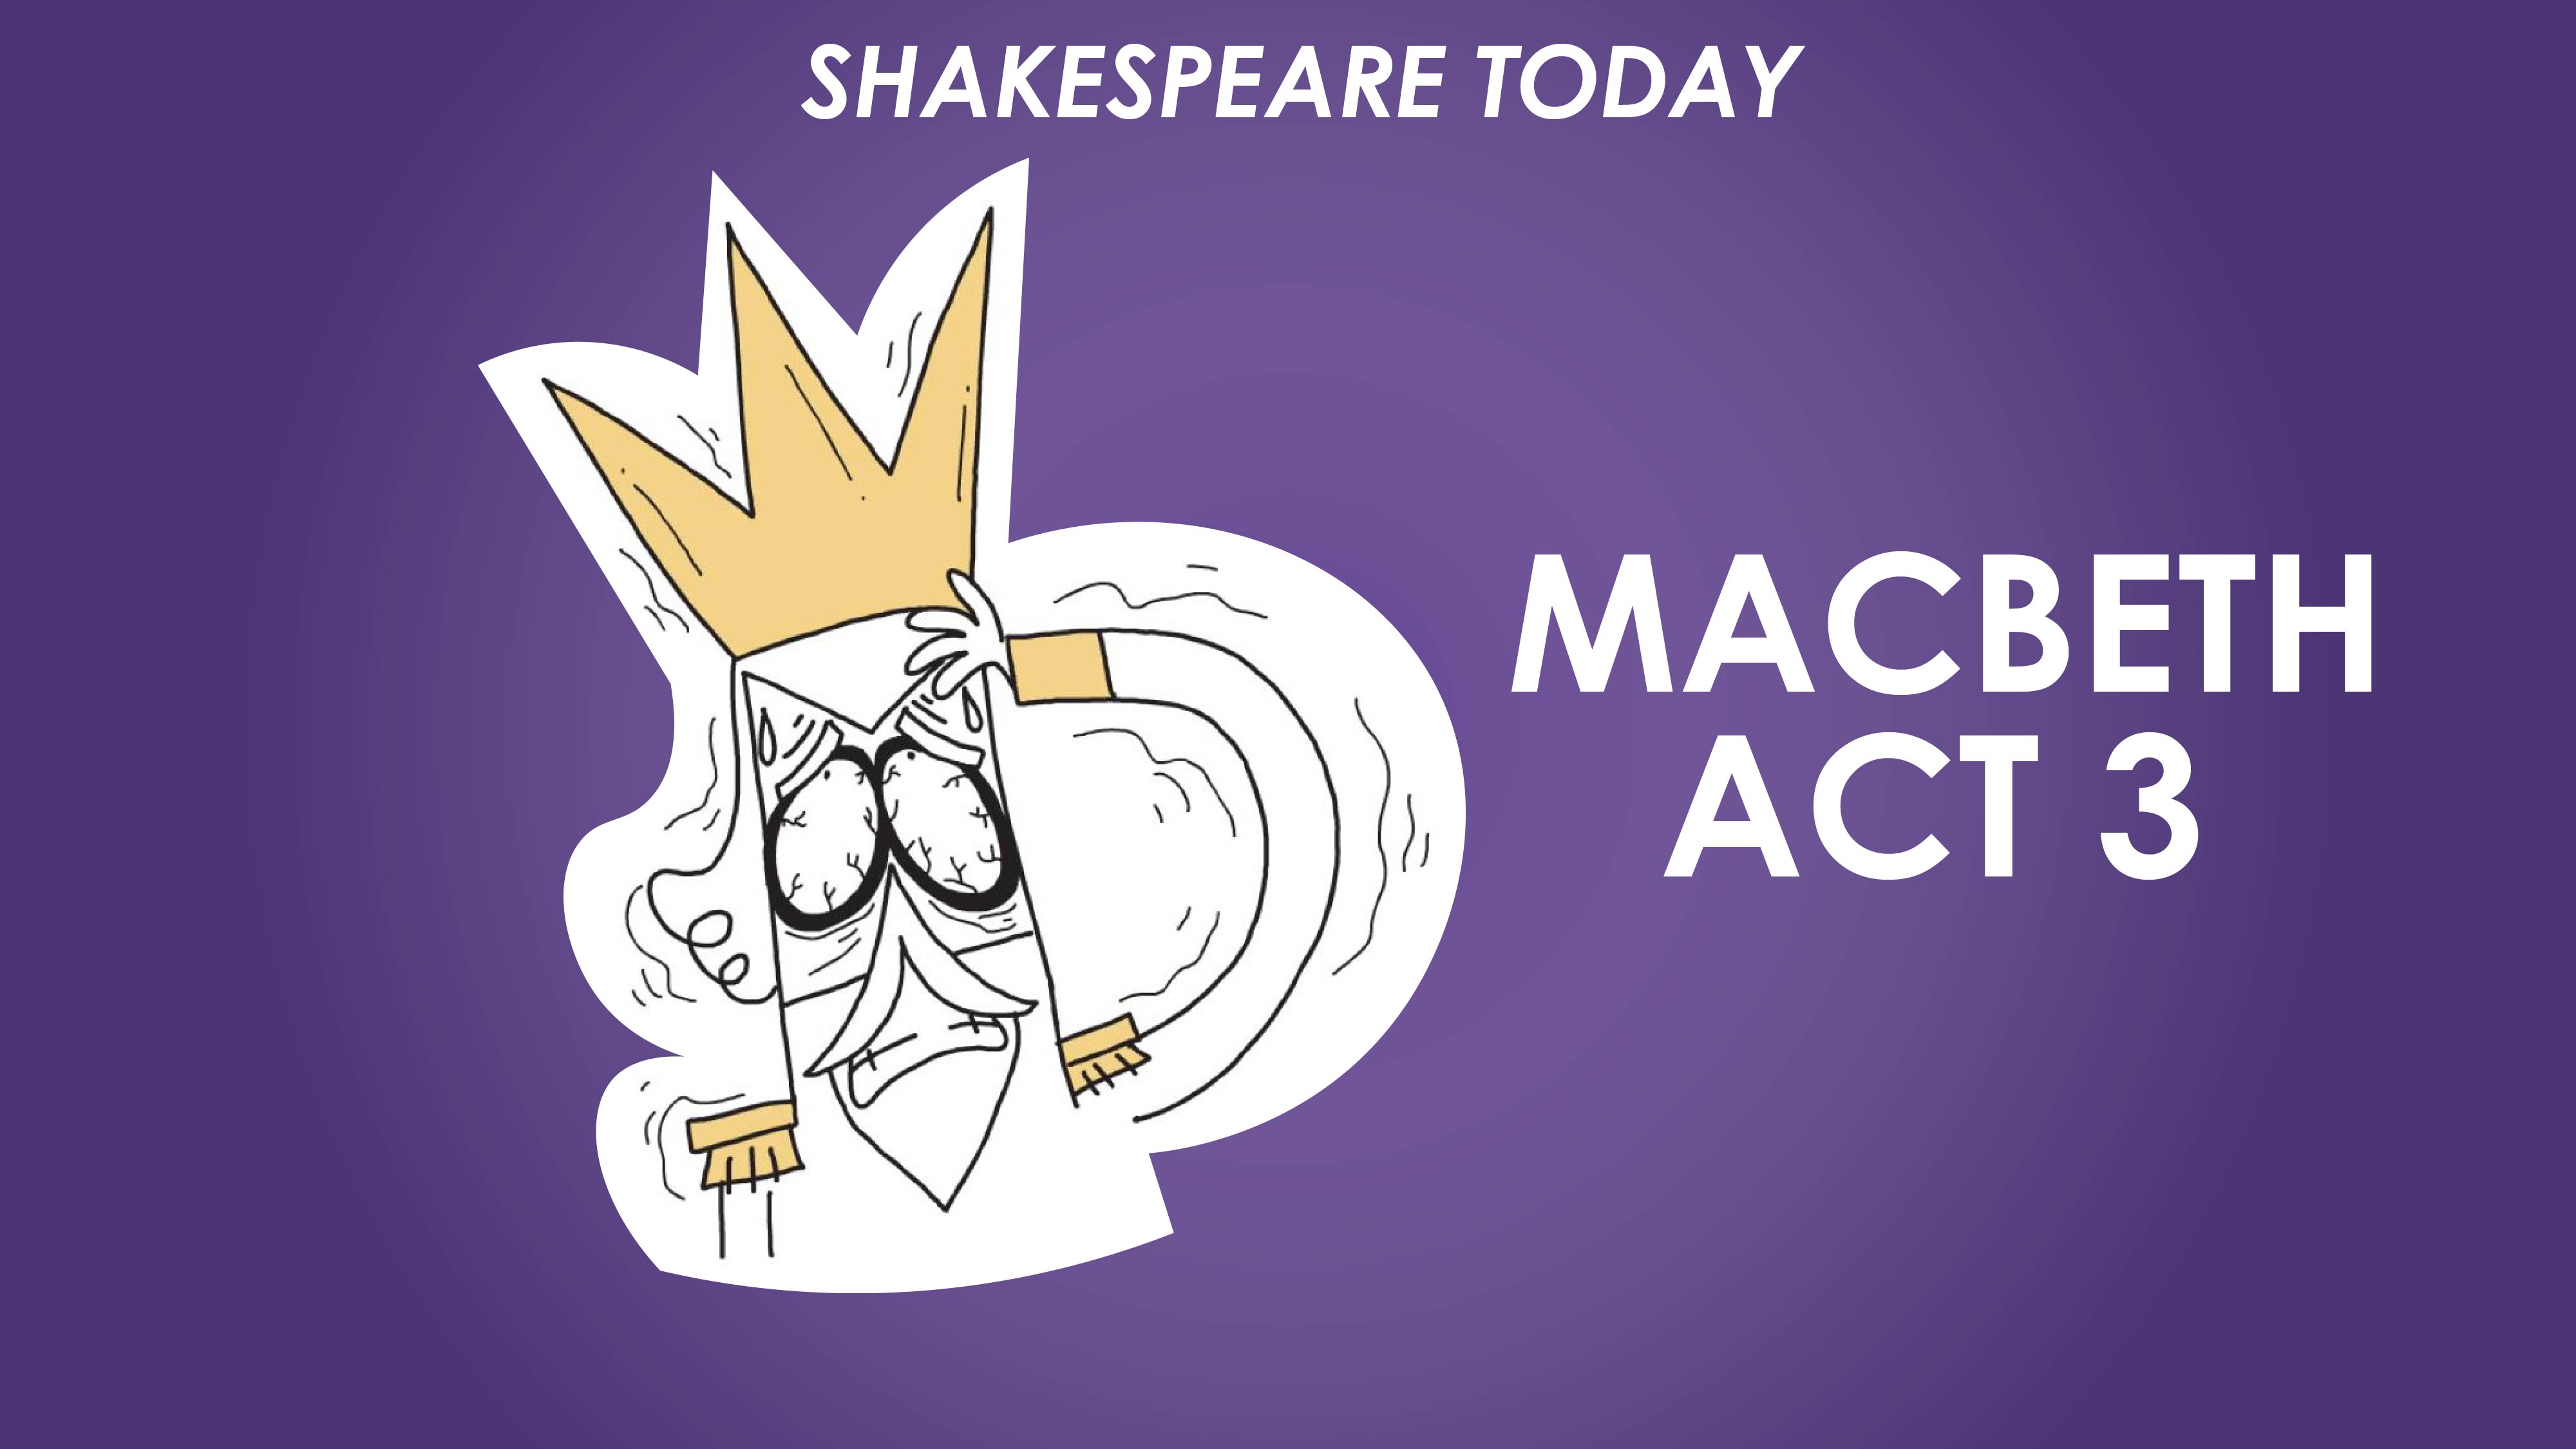 Macbeth Act 3 Summary - Shakespeare Today Series